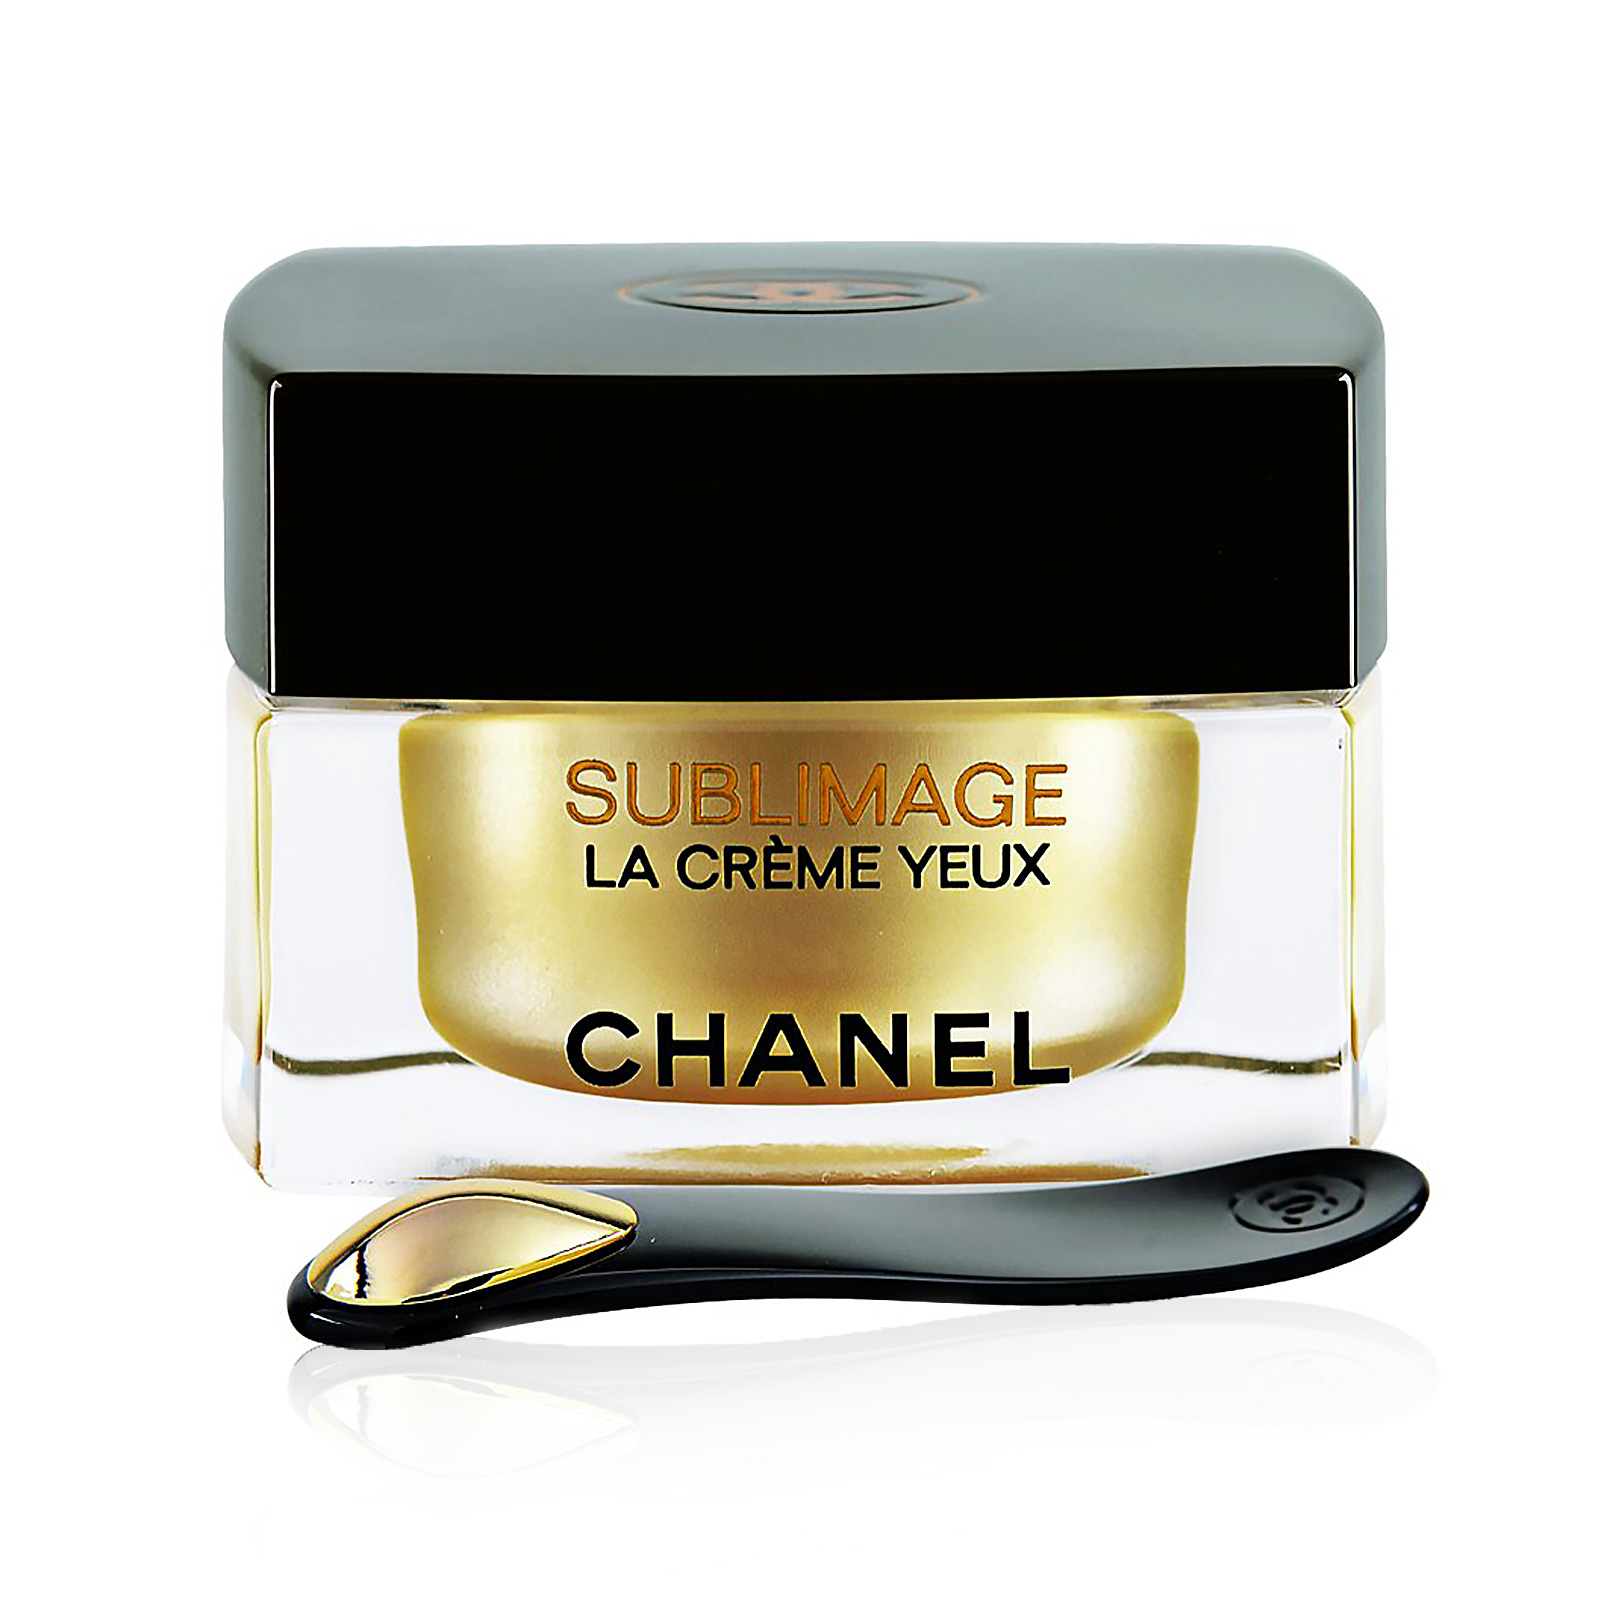 Chanel - Sublimage La Creme (Texture Supreme) 50g/1.7oz - Moisturizers &  Treatments, Free Worldwide Shipping